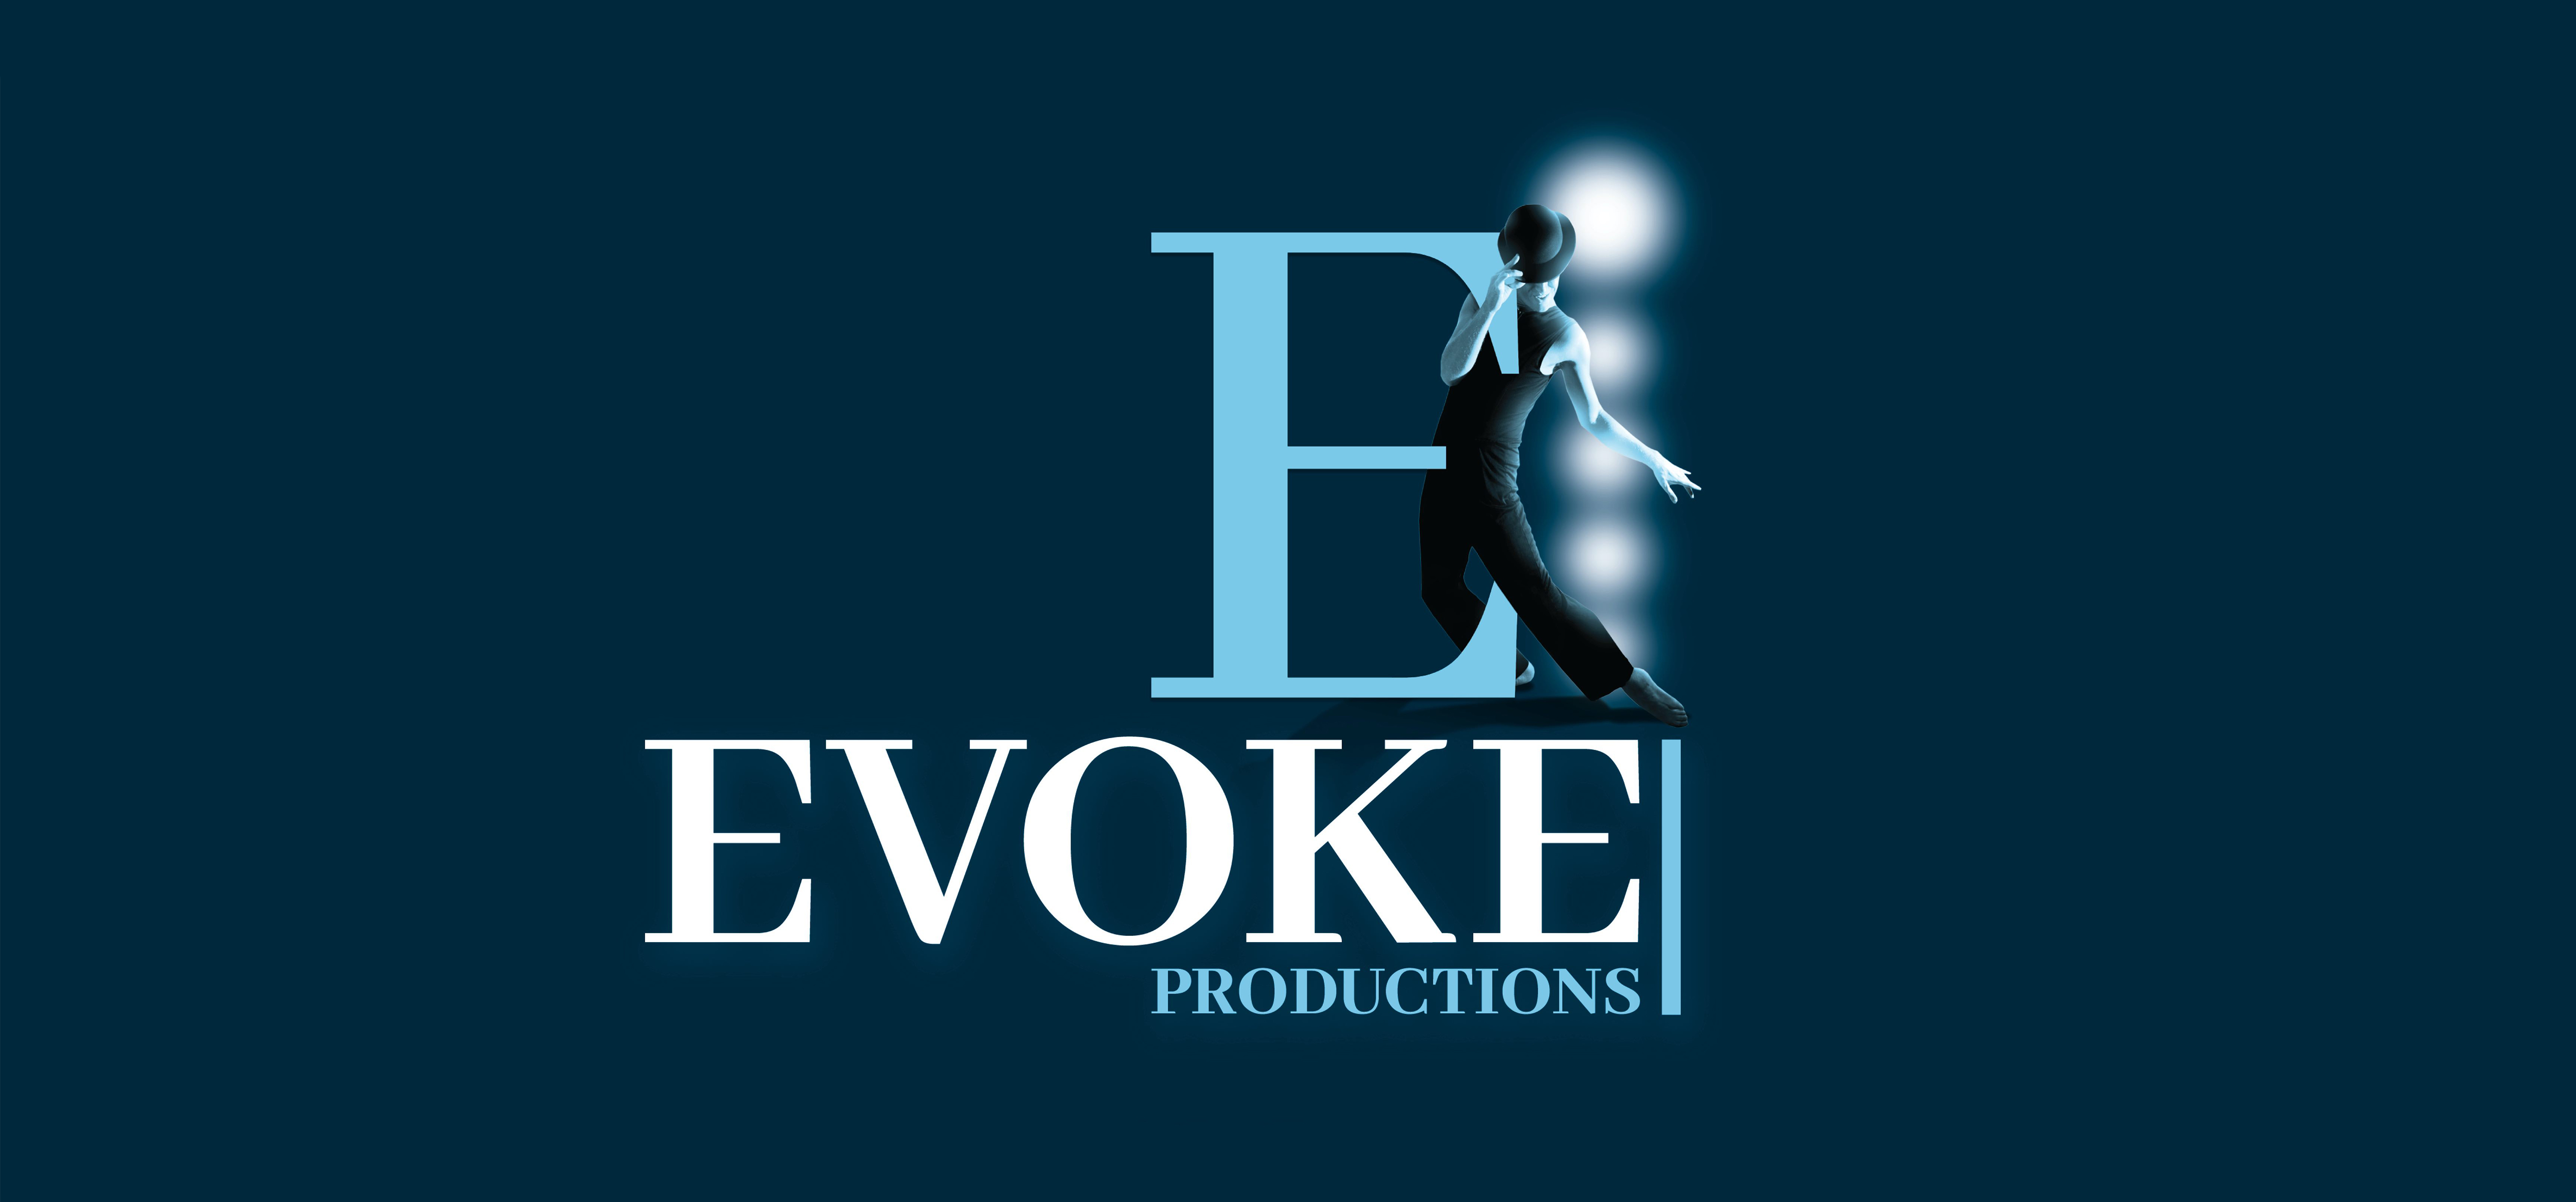 EVOKE Productions casting call 